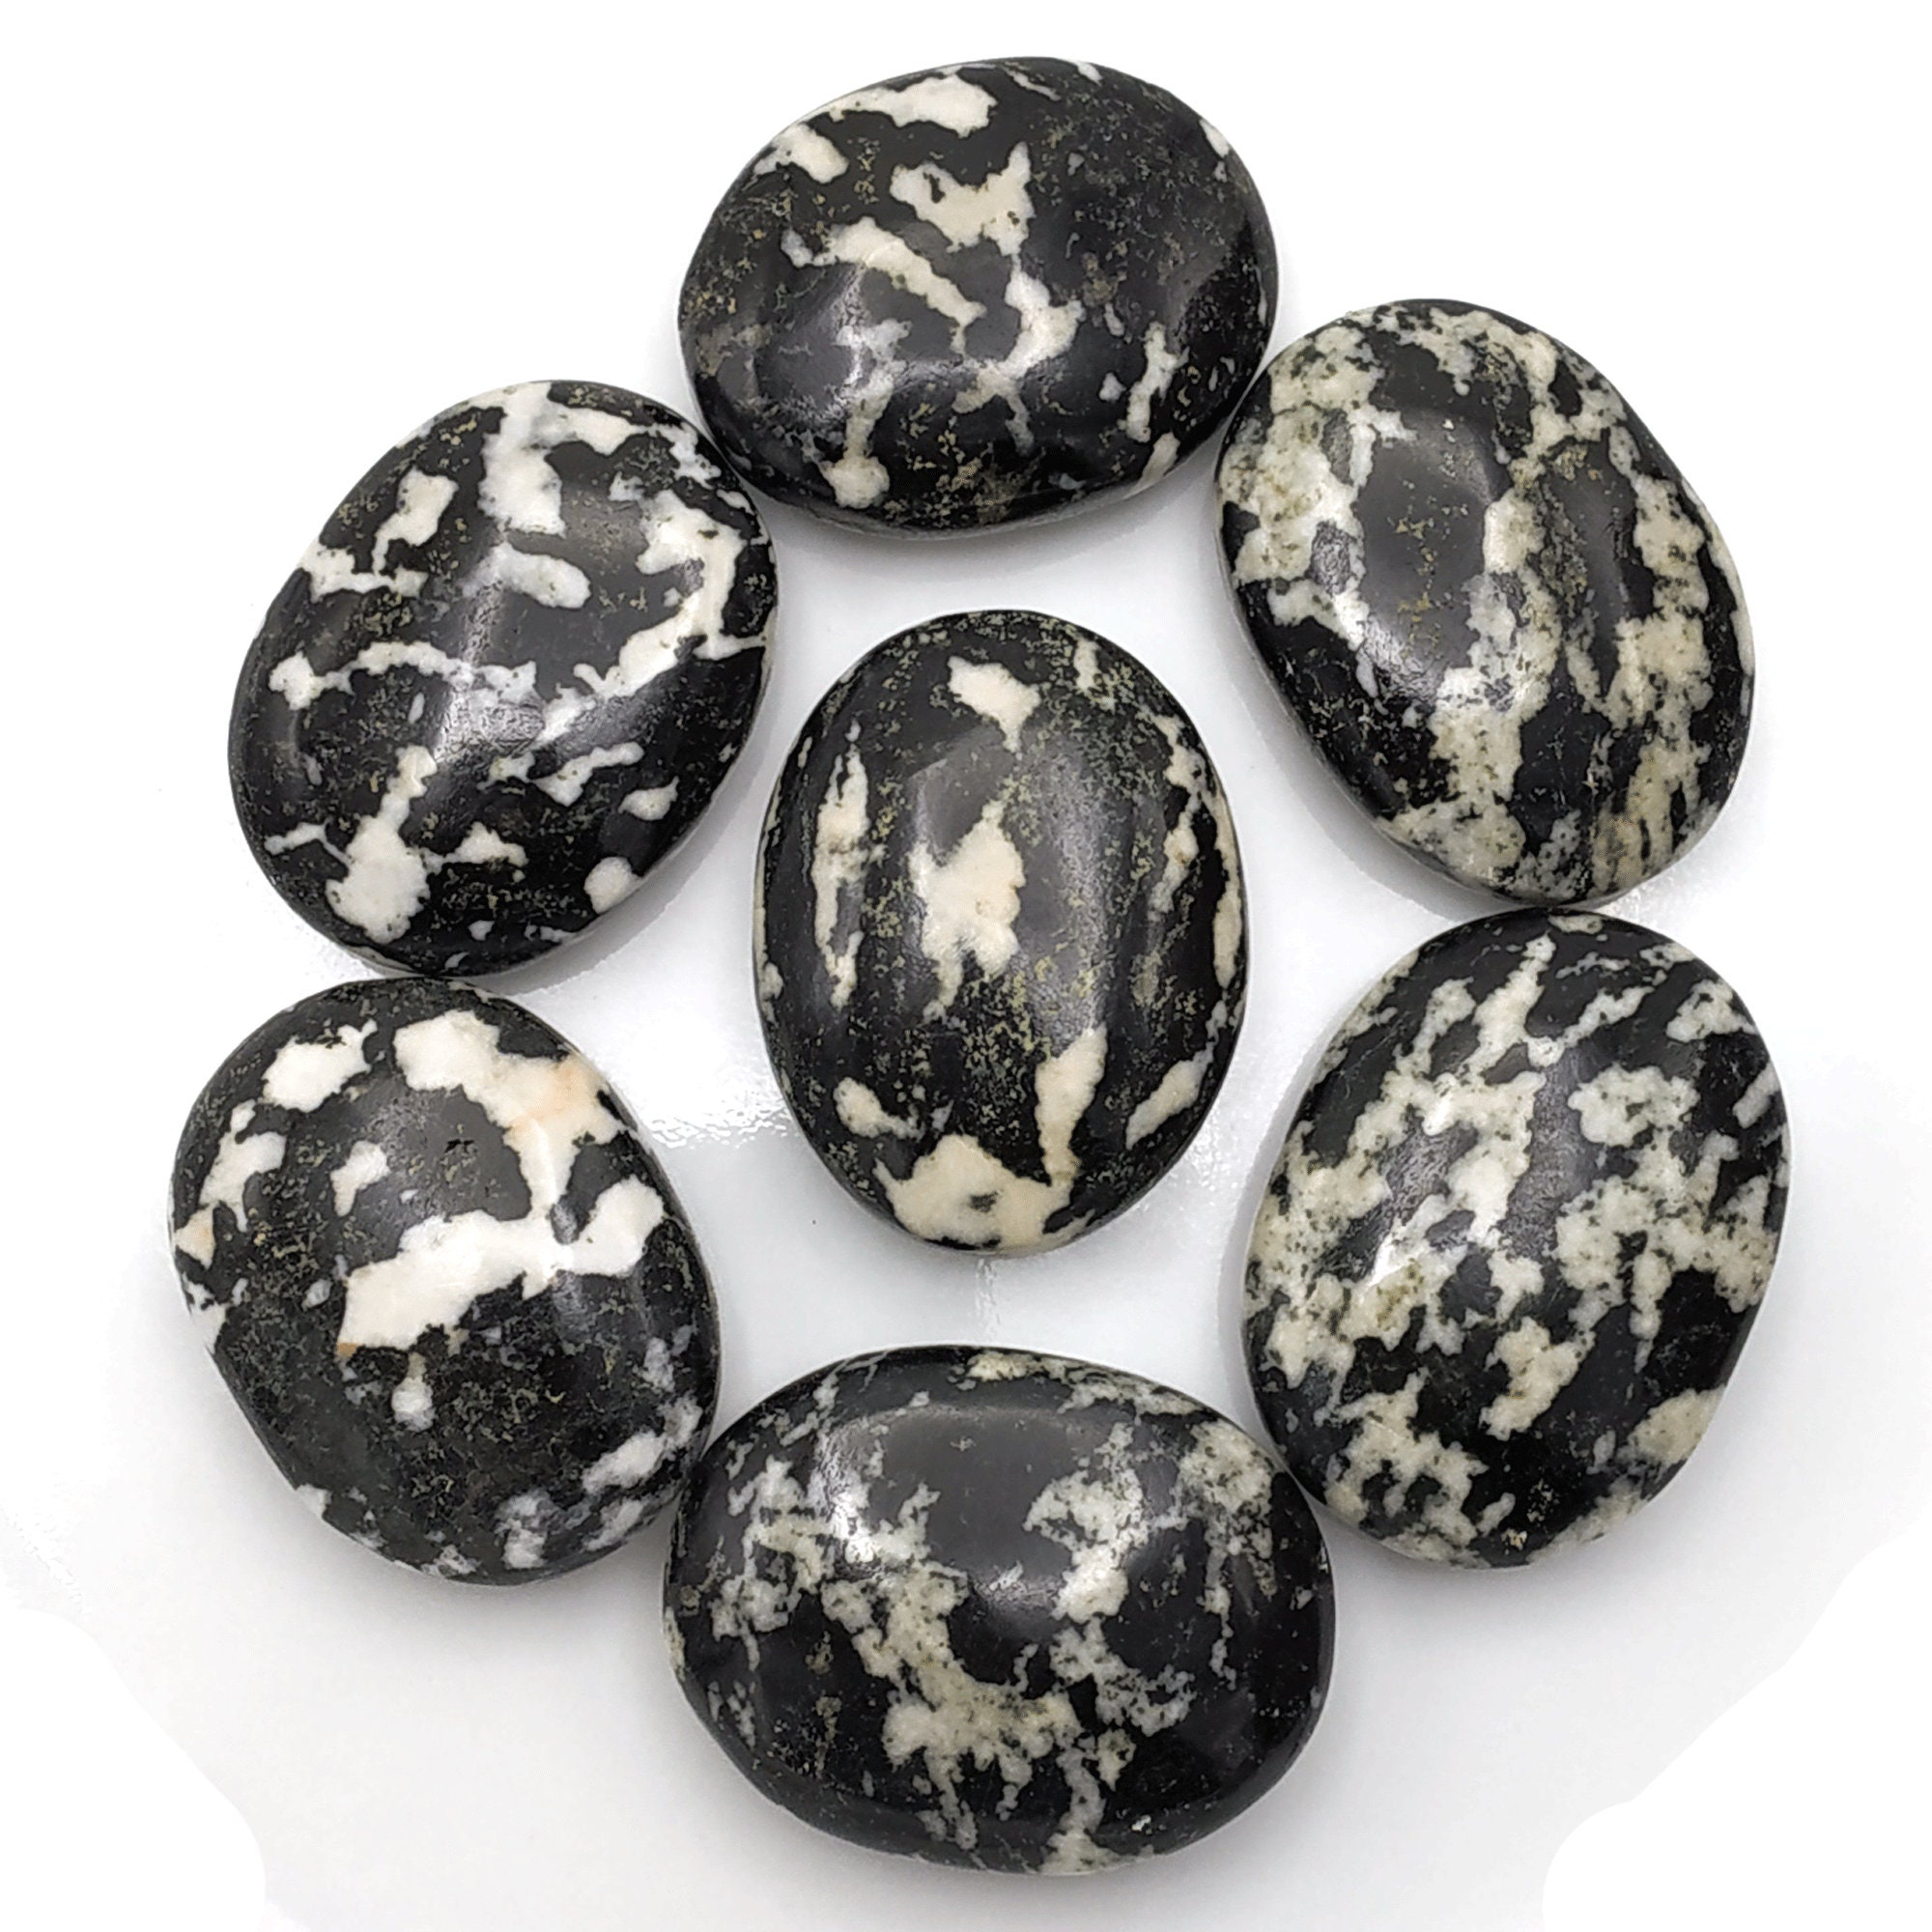 Black & White Tourmaline Palm Stone Cristal Polished Gemstone Crystal  Palmstone, Healing Crystals and Stones tourmaline Crystal 